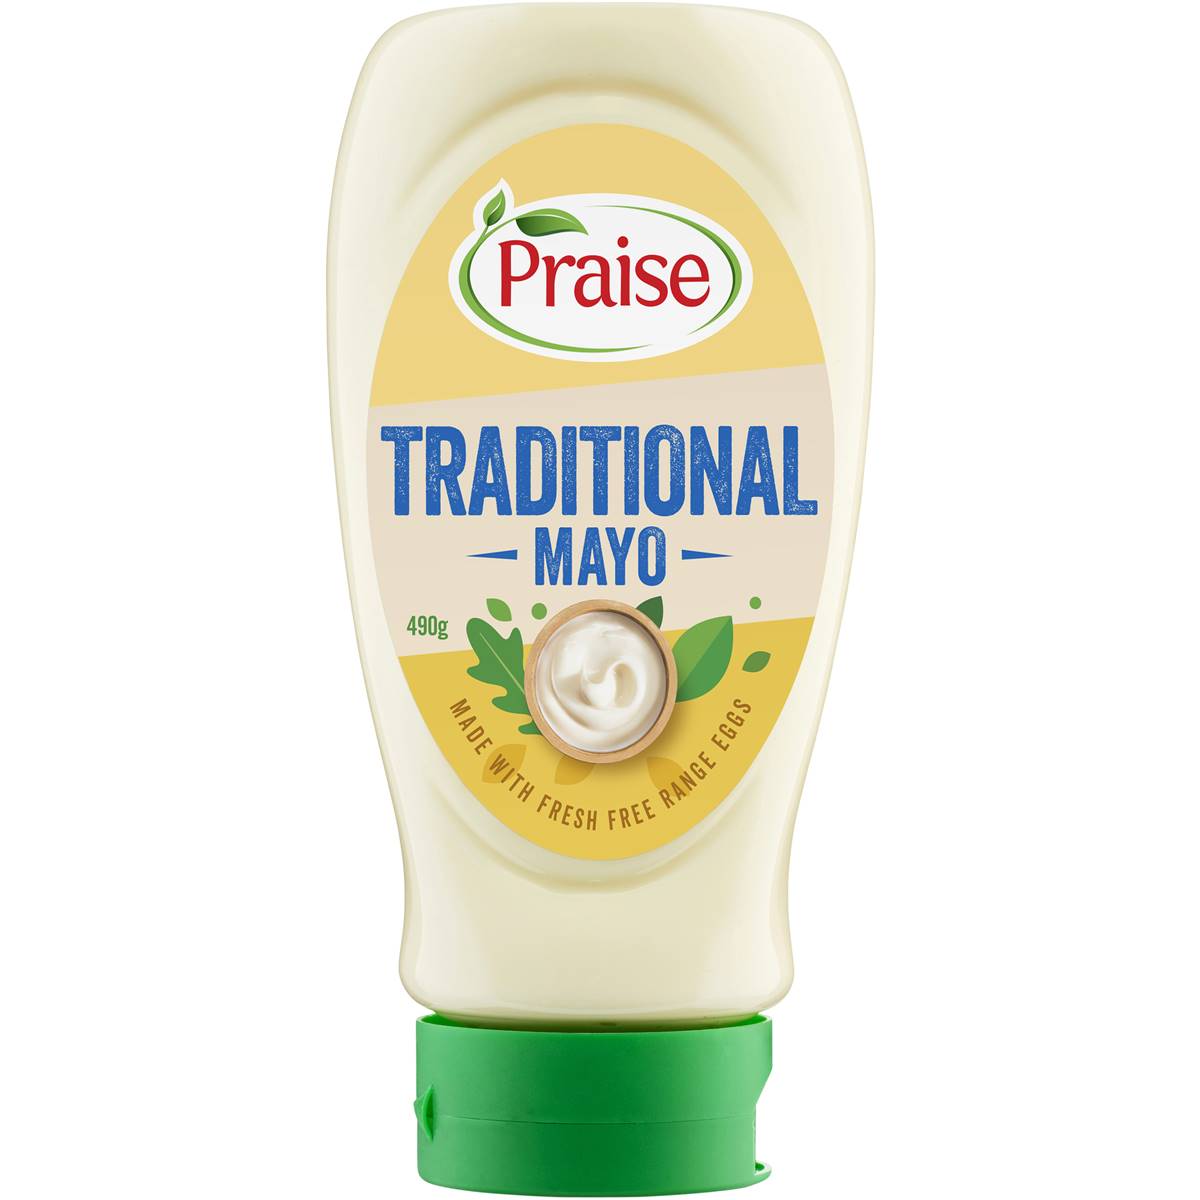 Praise Traditional Mayonnaise 490g